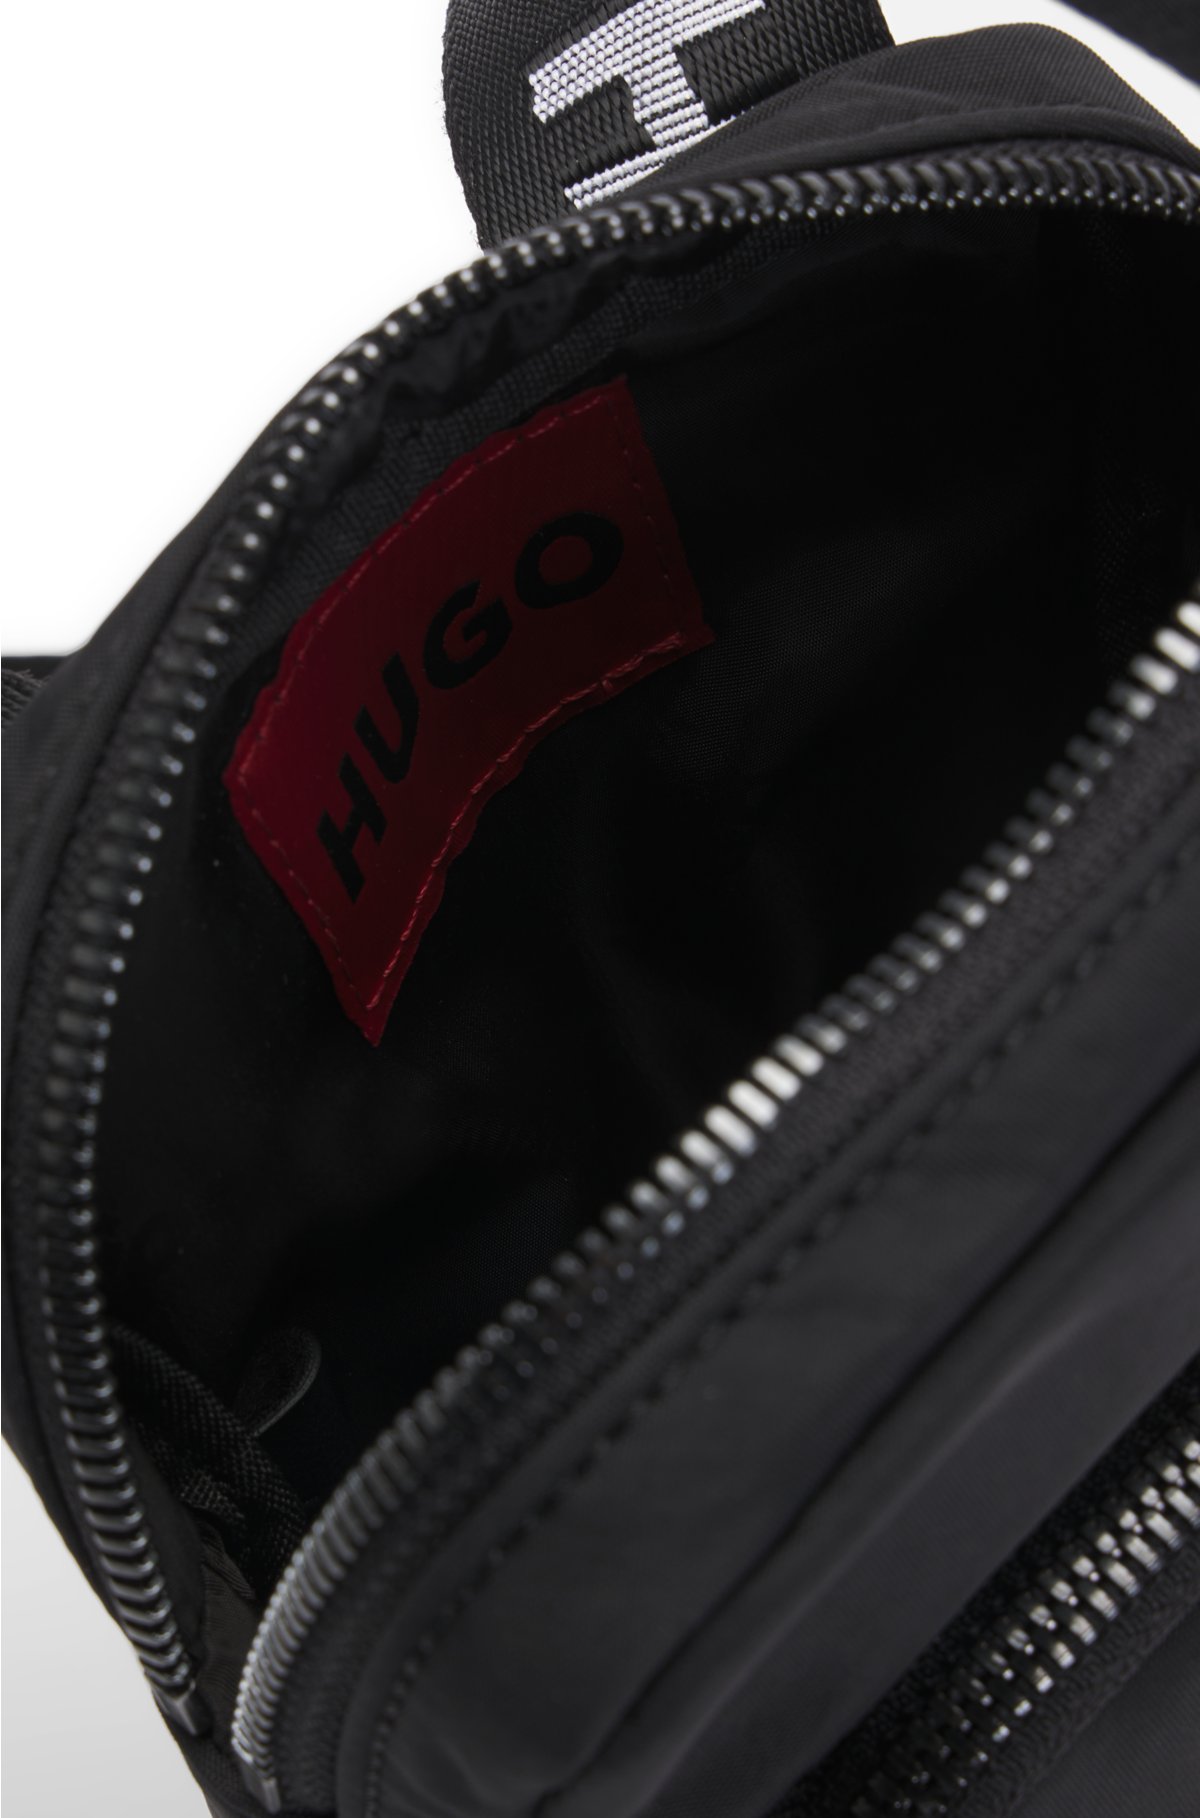 HUGO - Mini reporter bag with logo lettering